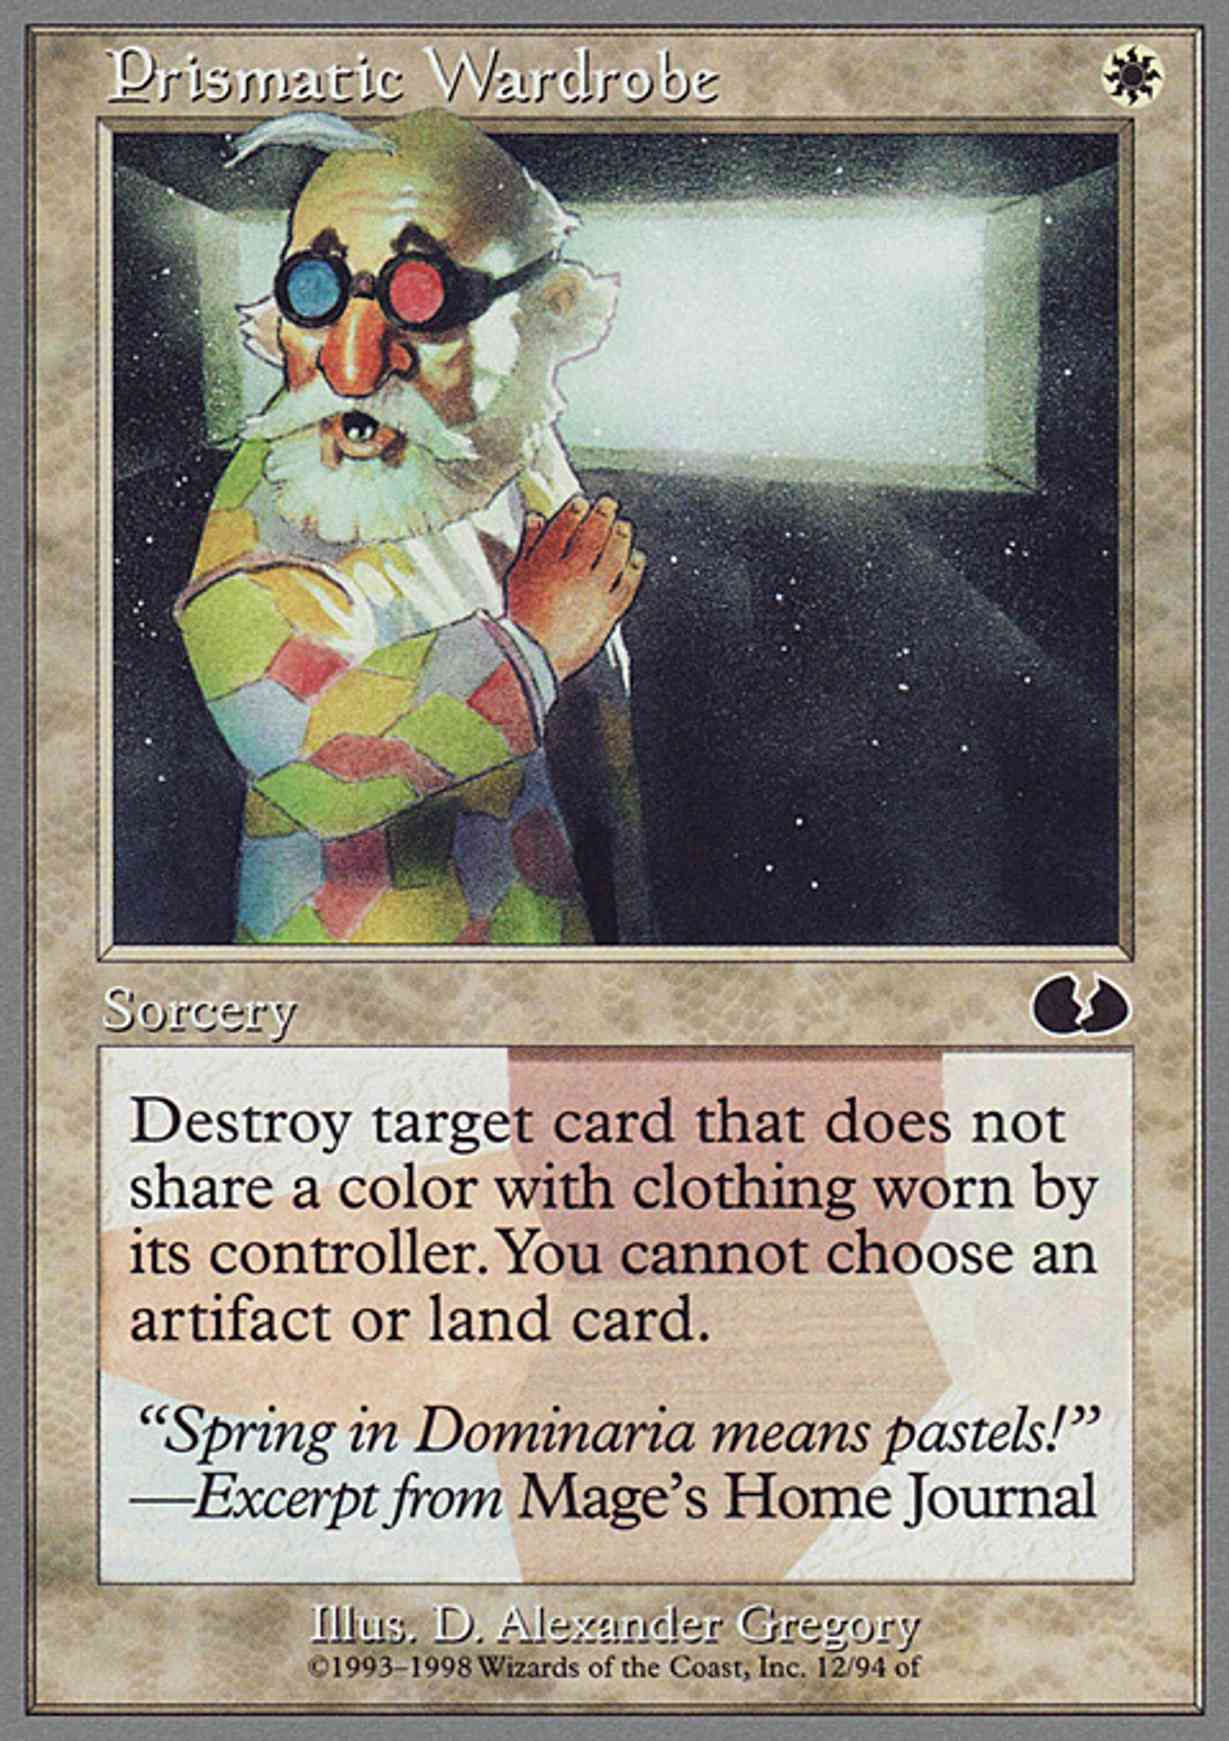 Prismatic Wardrobe magic card front